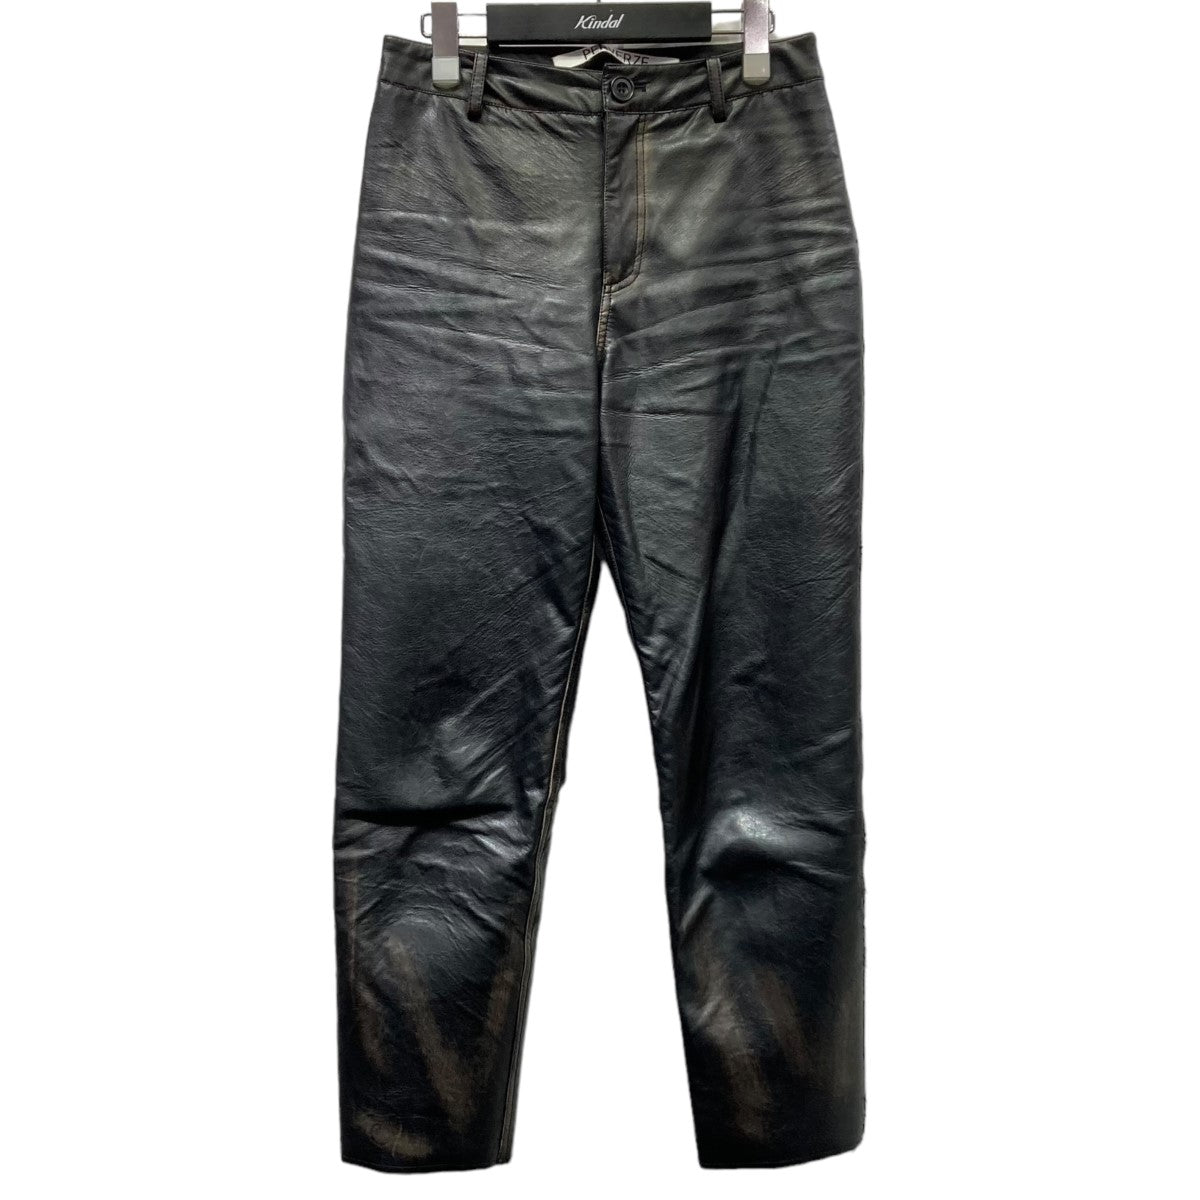 PERVERZE(パーバーズ) Washed Leather Cropped Trousers フェイクレザーパンツ ブラック サイズ:M レディース パンツ 中古・古着